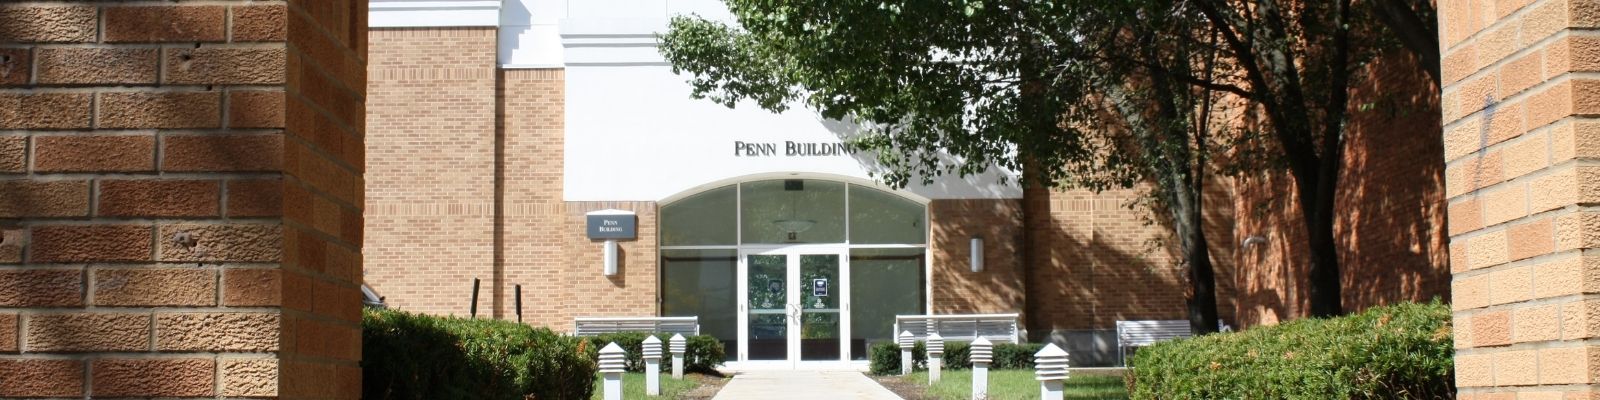 PSU Downtown Altoona - Penn Building